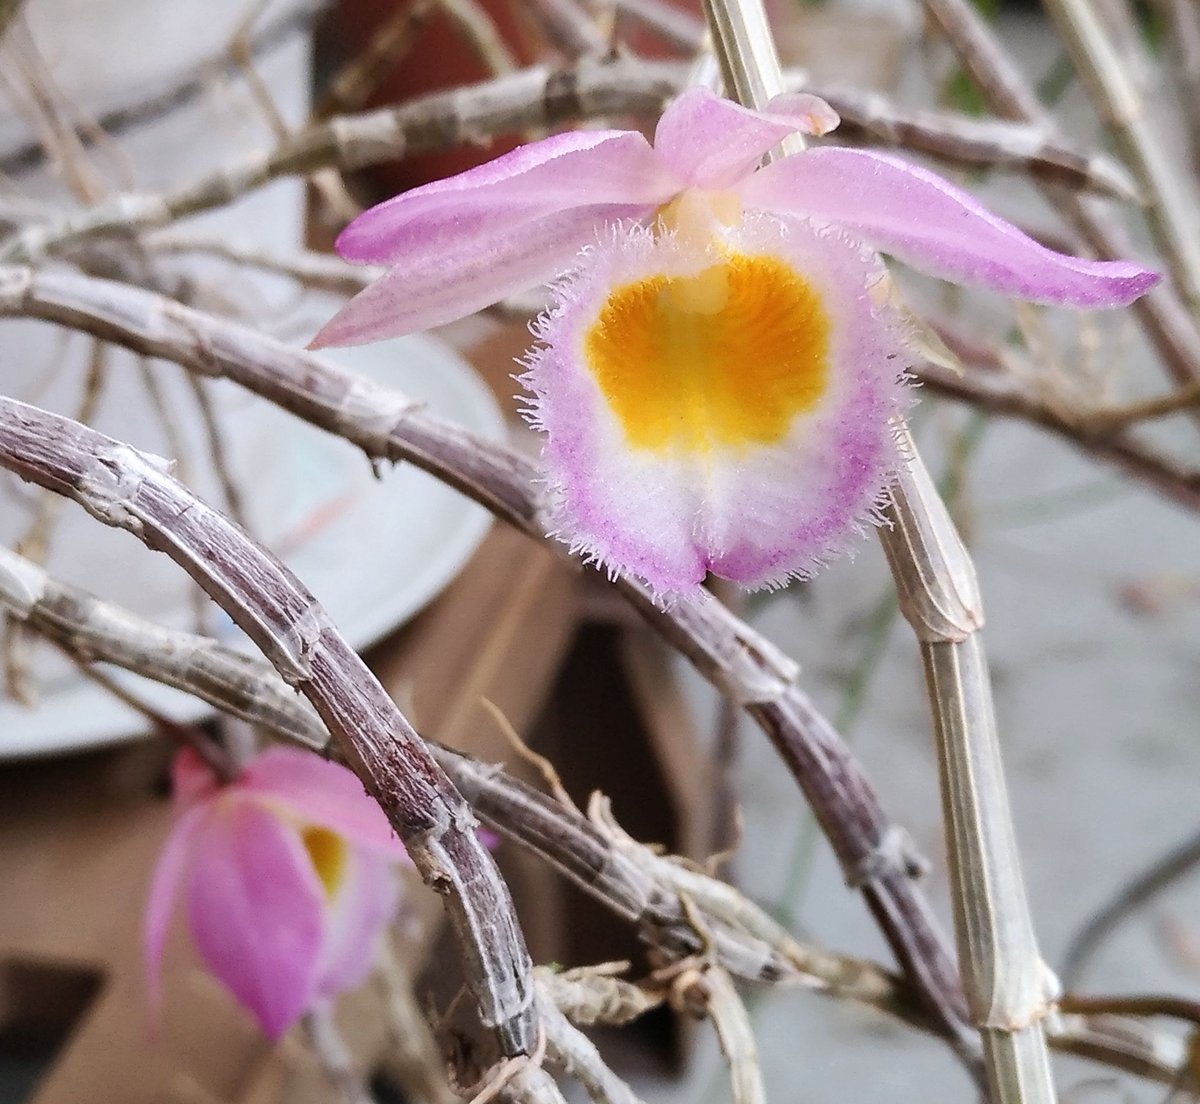 ট ইট র こころんグリーン デンドロビュームのピンクの花びらの 綺麗な花が開いています 真ん中の黄色とのコントラストが鮮やかです 暫くの間は 咲いていてくれると思います デンドロビューム ピンク 花びら 黄色 春 春の花 園芸品種 園芸